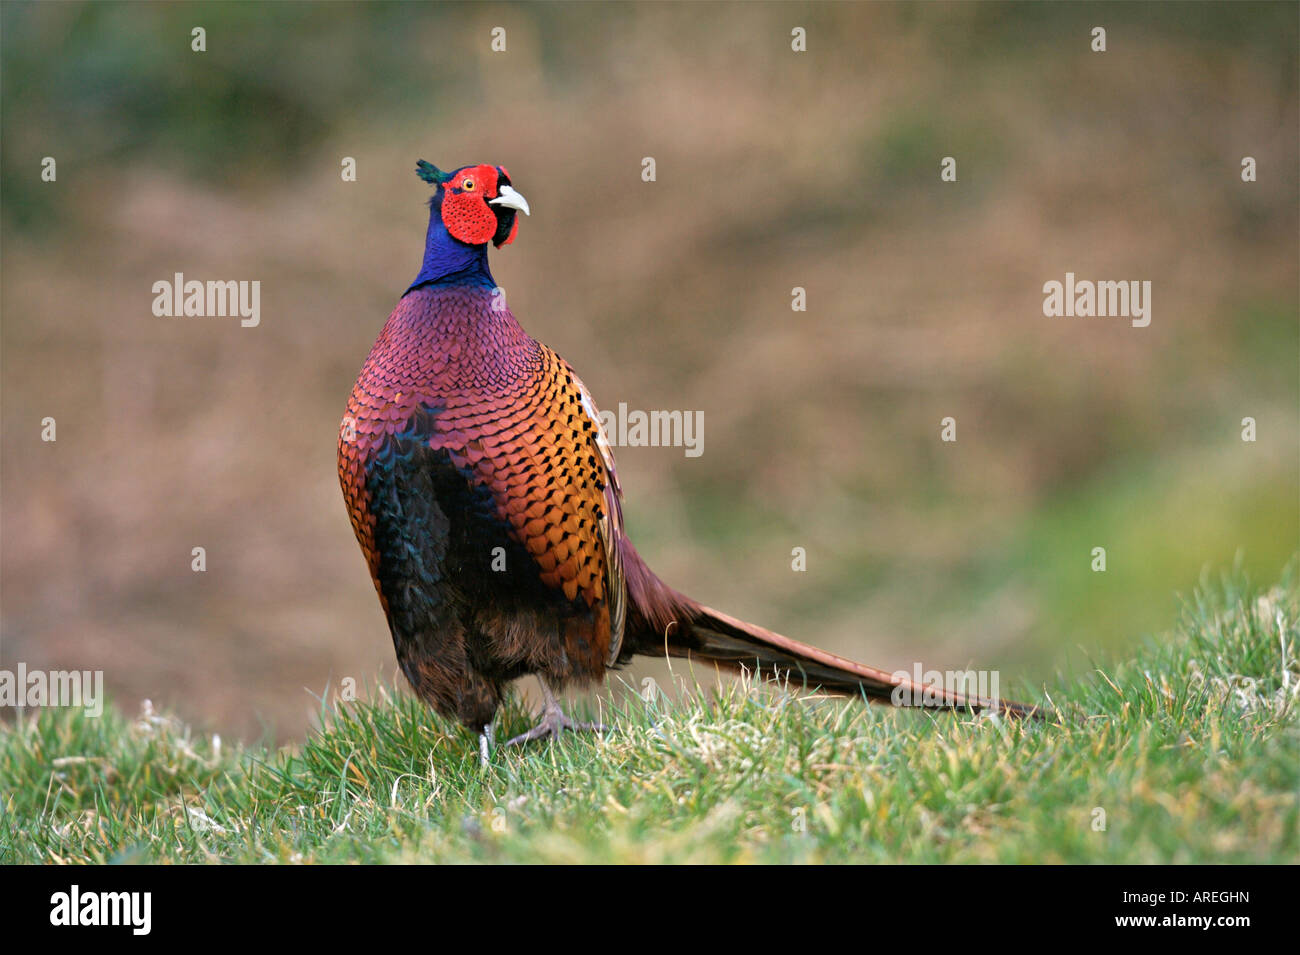 Cock Pheasant patrolling his territory Stock Photo